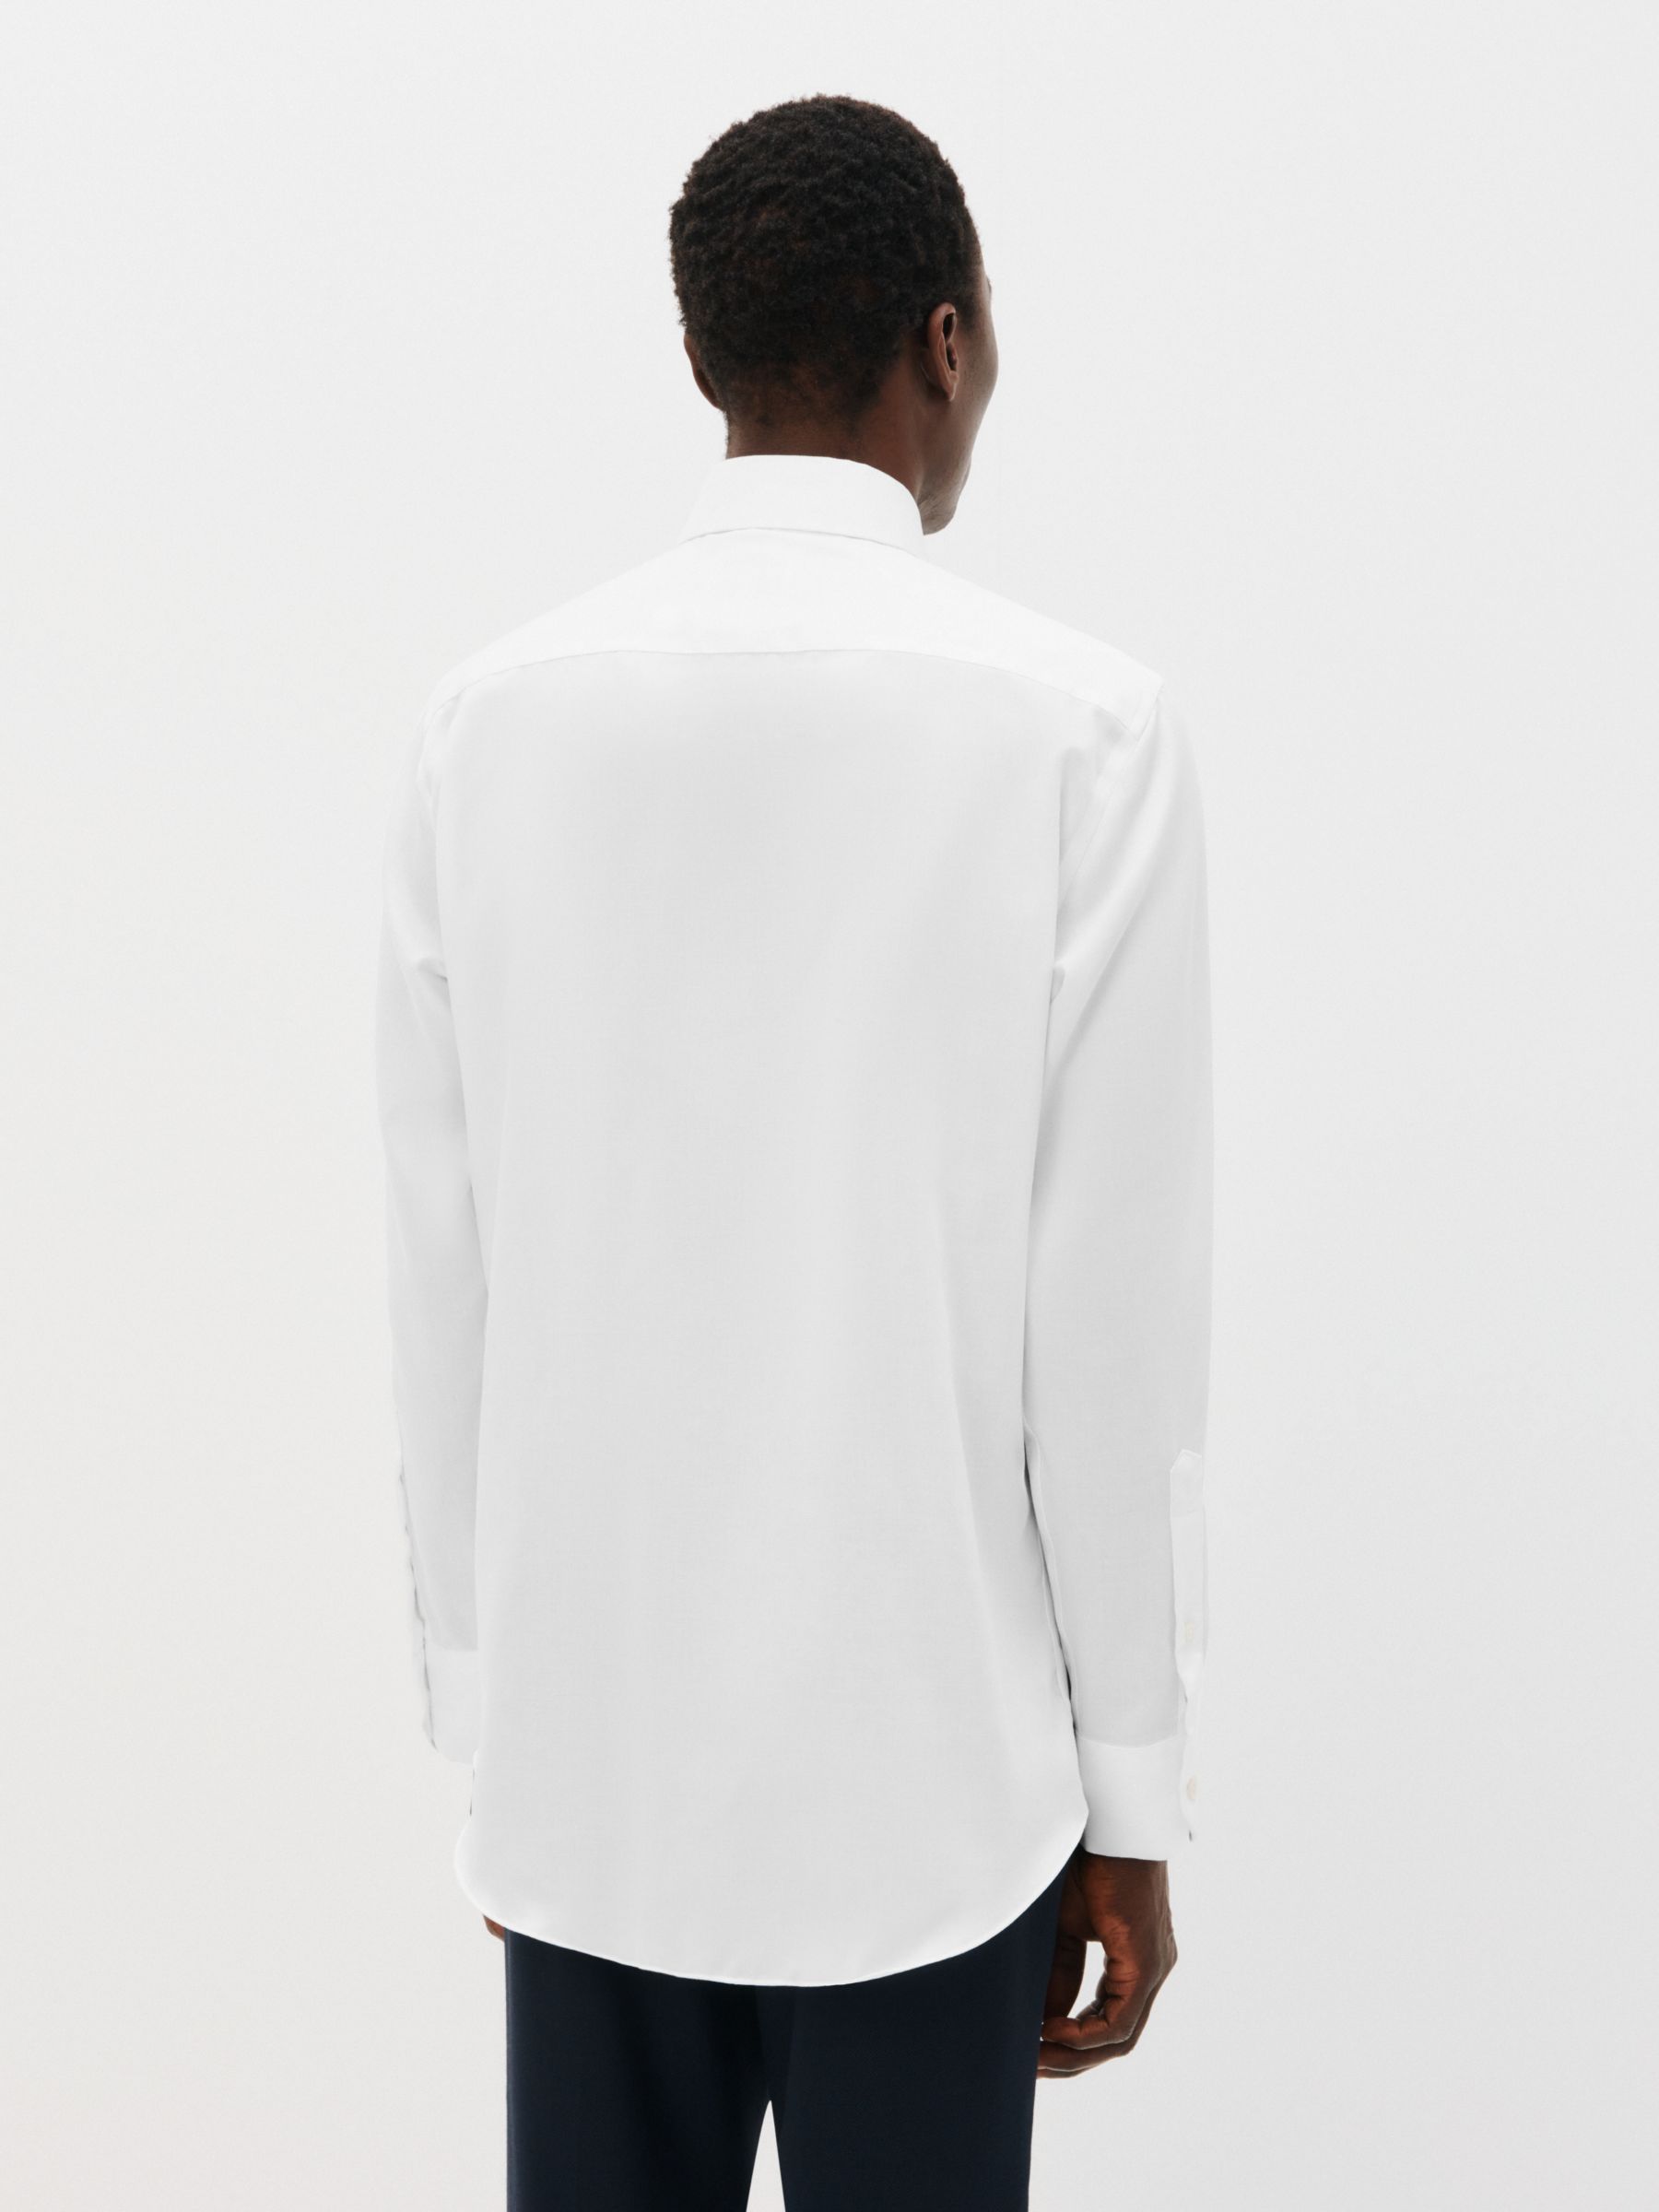 John Lewis Dobby Tailored Fit Shirt, White, 17.5R